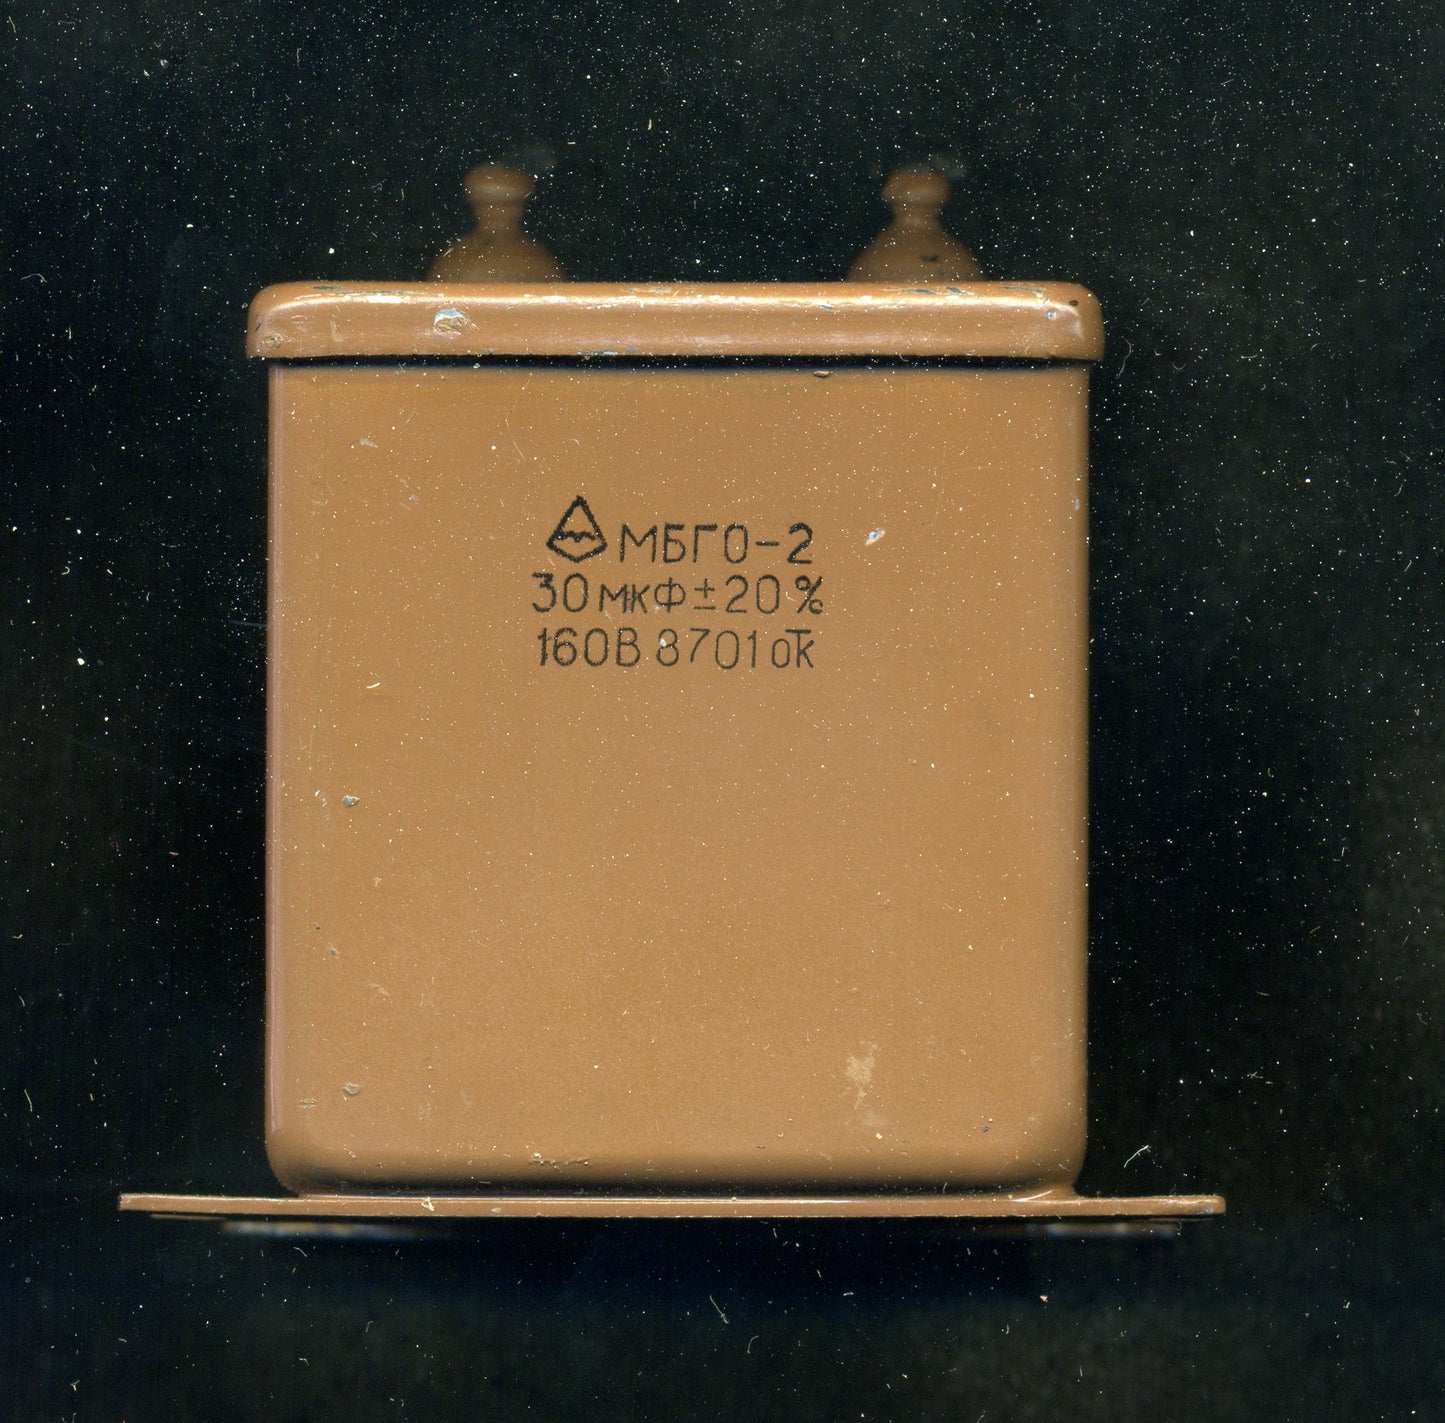 MBGO-2 Metallized Paper-in-Oil Capacitor